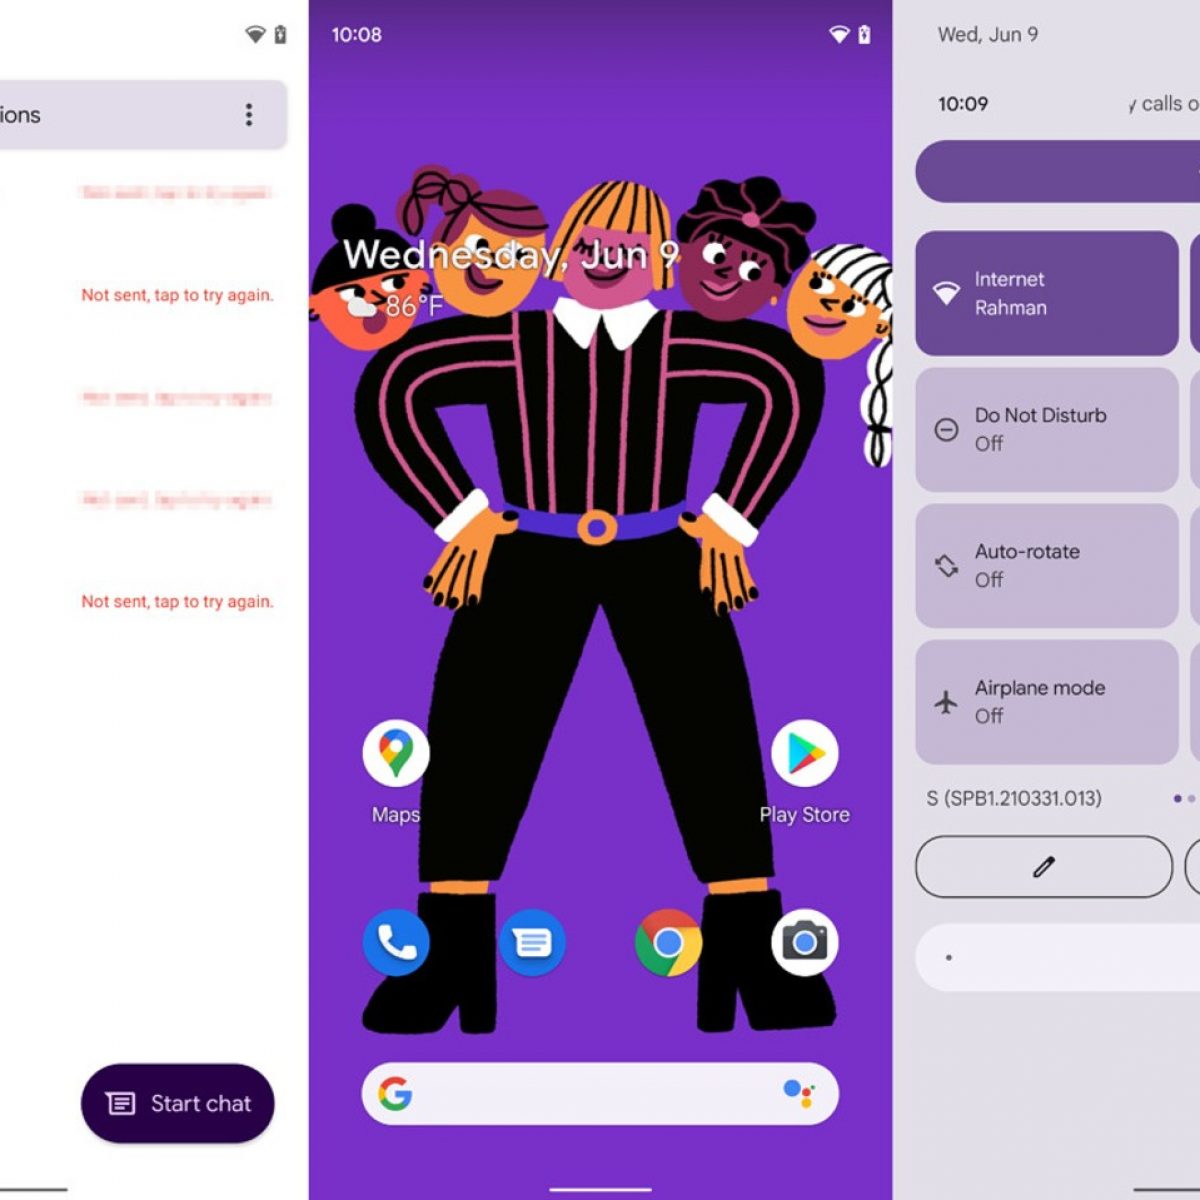 What app has purple messages?